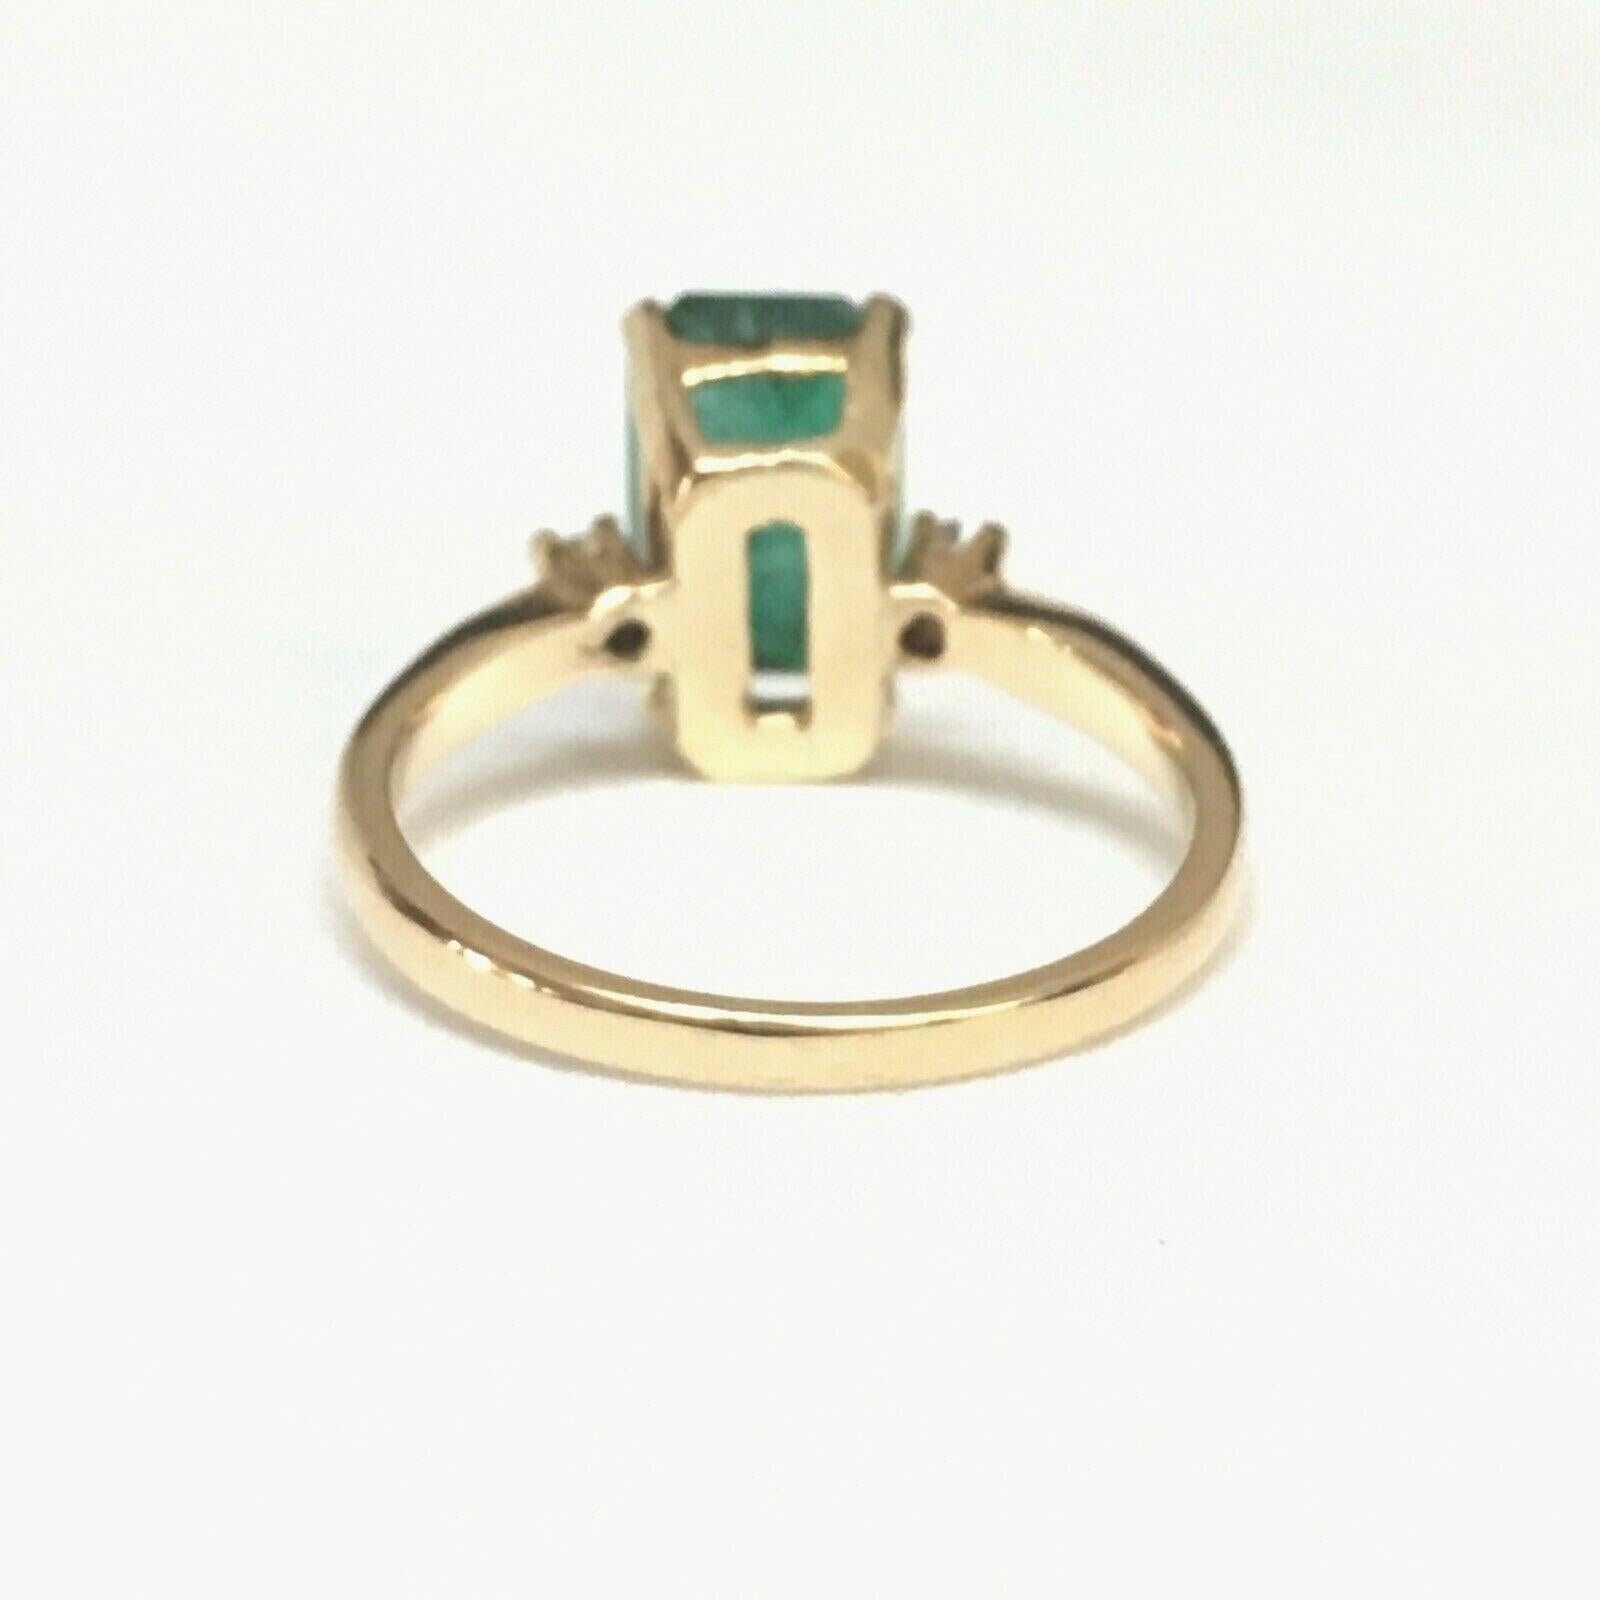 2.25 Carat Natural Emerald 14K Gold Diamond Ring 3.5 Gram Size 7.25 Bon état - En vente à Santa Monica, CA